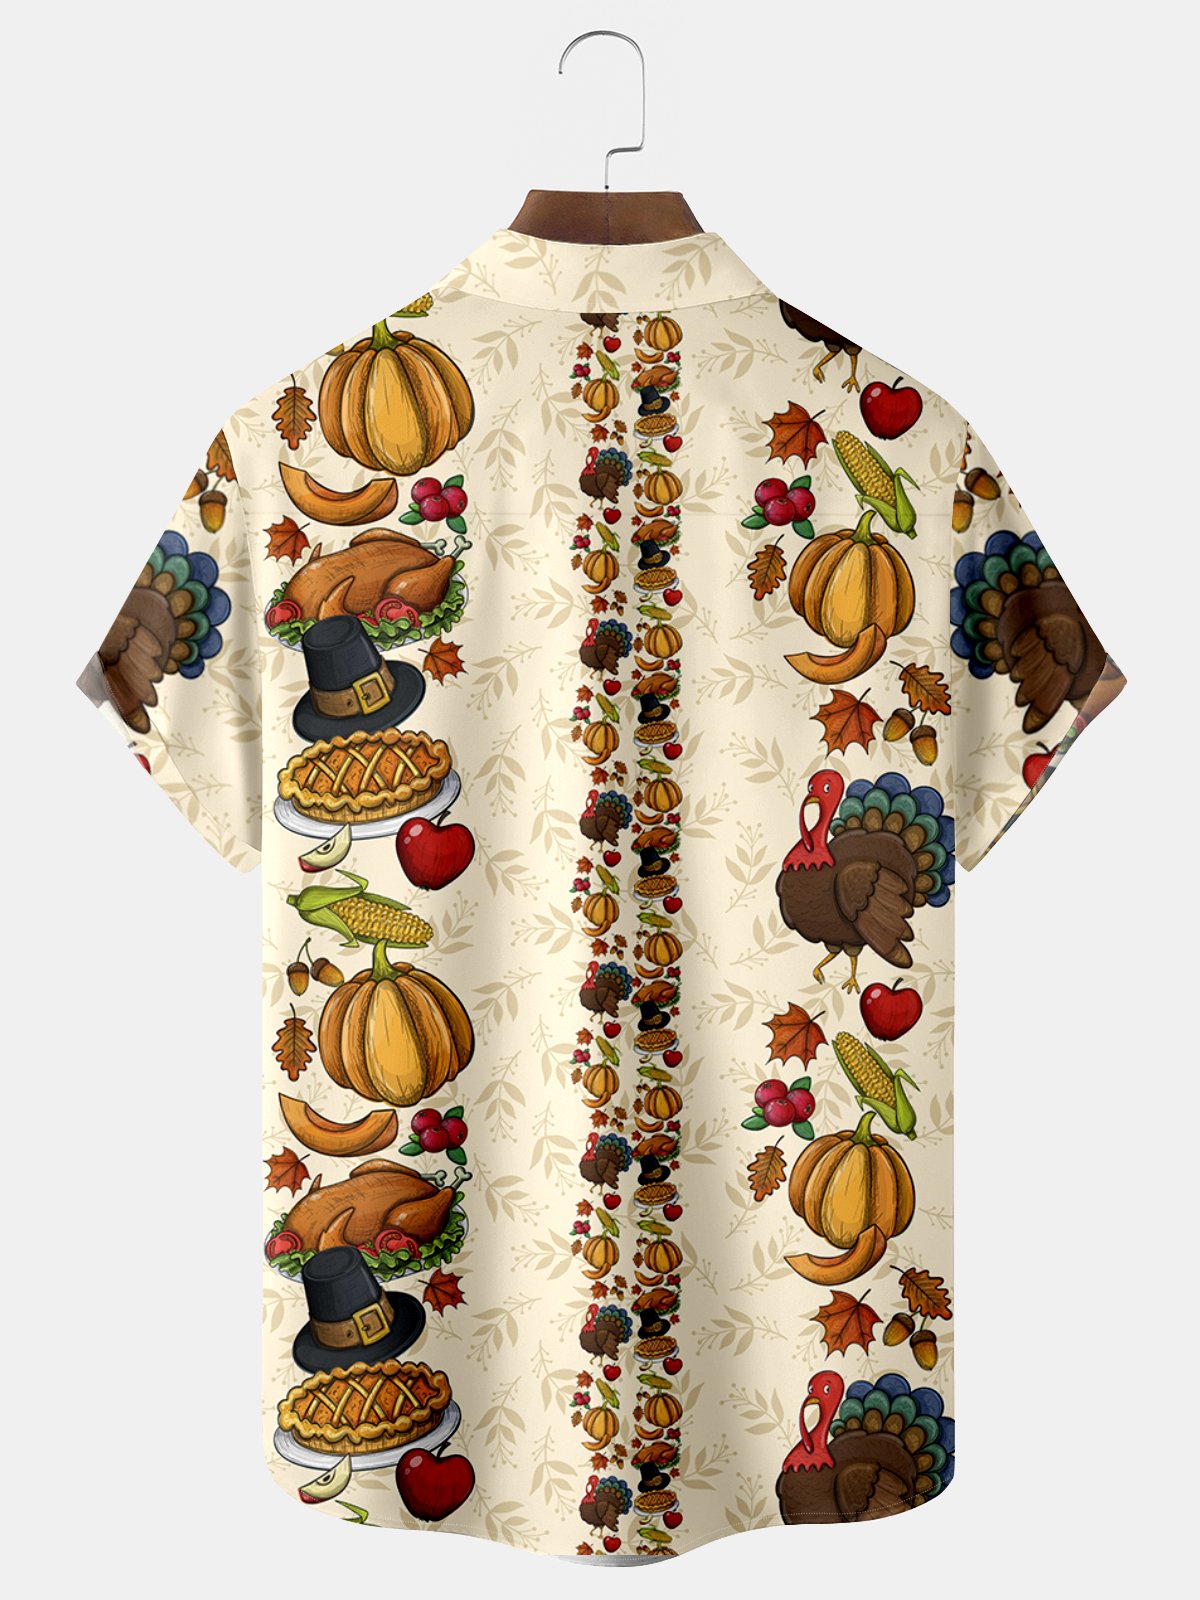 Royaura Thanksgiving Turkey Squash Print Beach Men's Hawaiian Oversized Shirt with Pockets